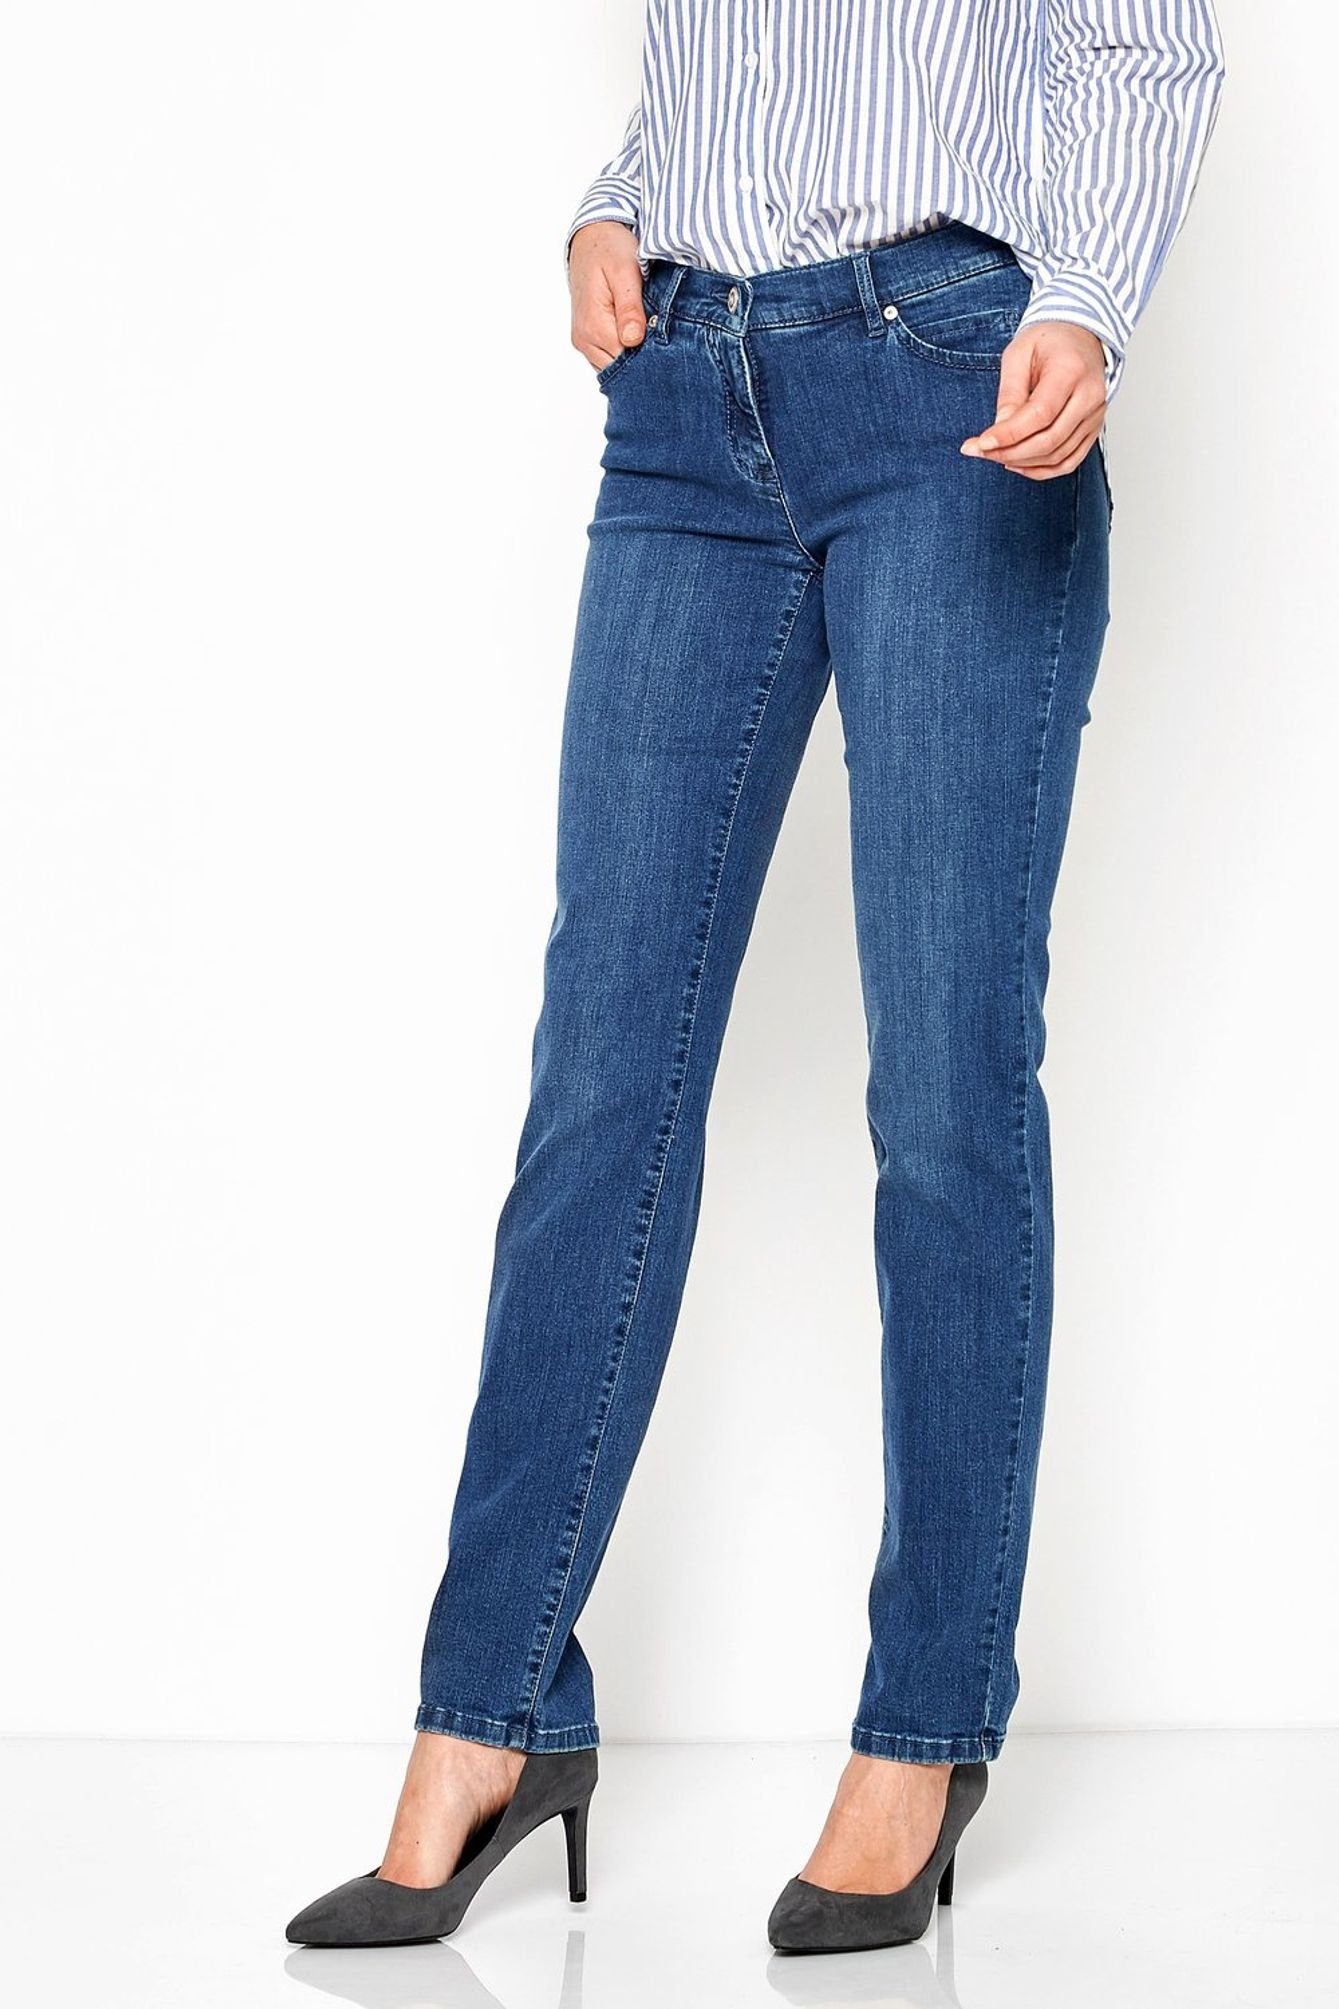 TONI 5-Pocket-Jeans 12-04 1106 5-Pocket-Design mid used blue (502)